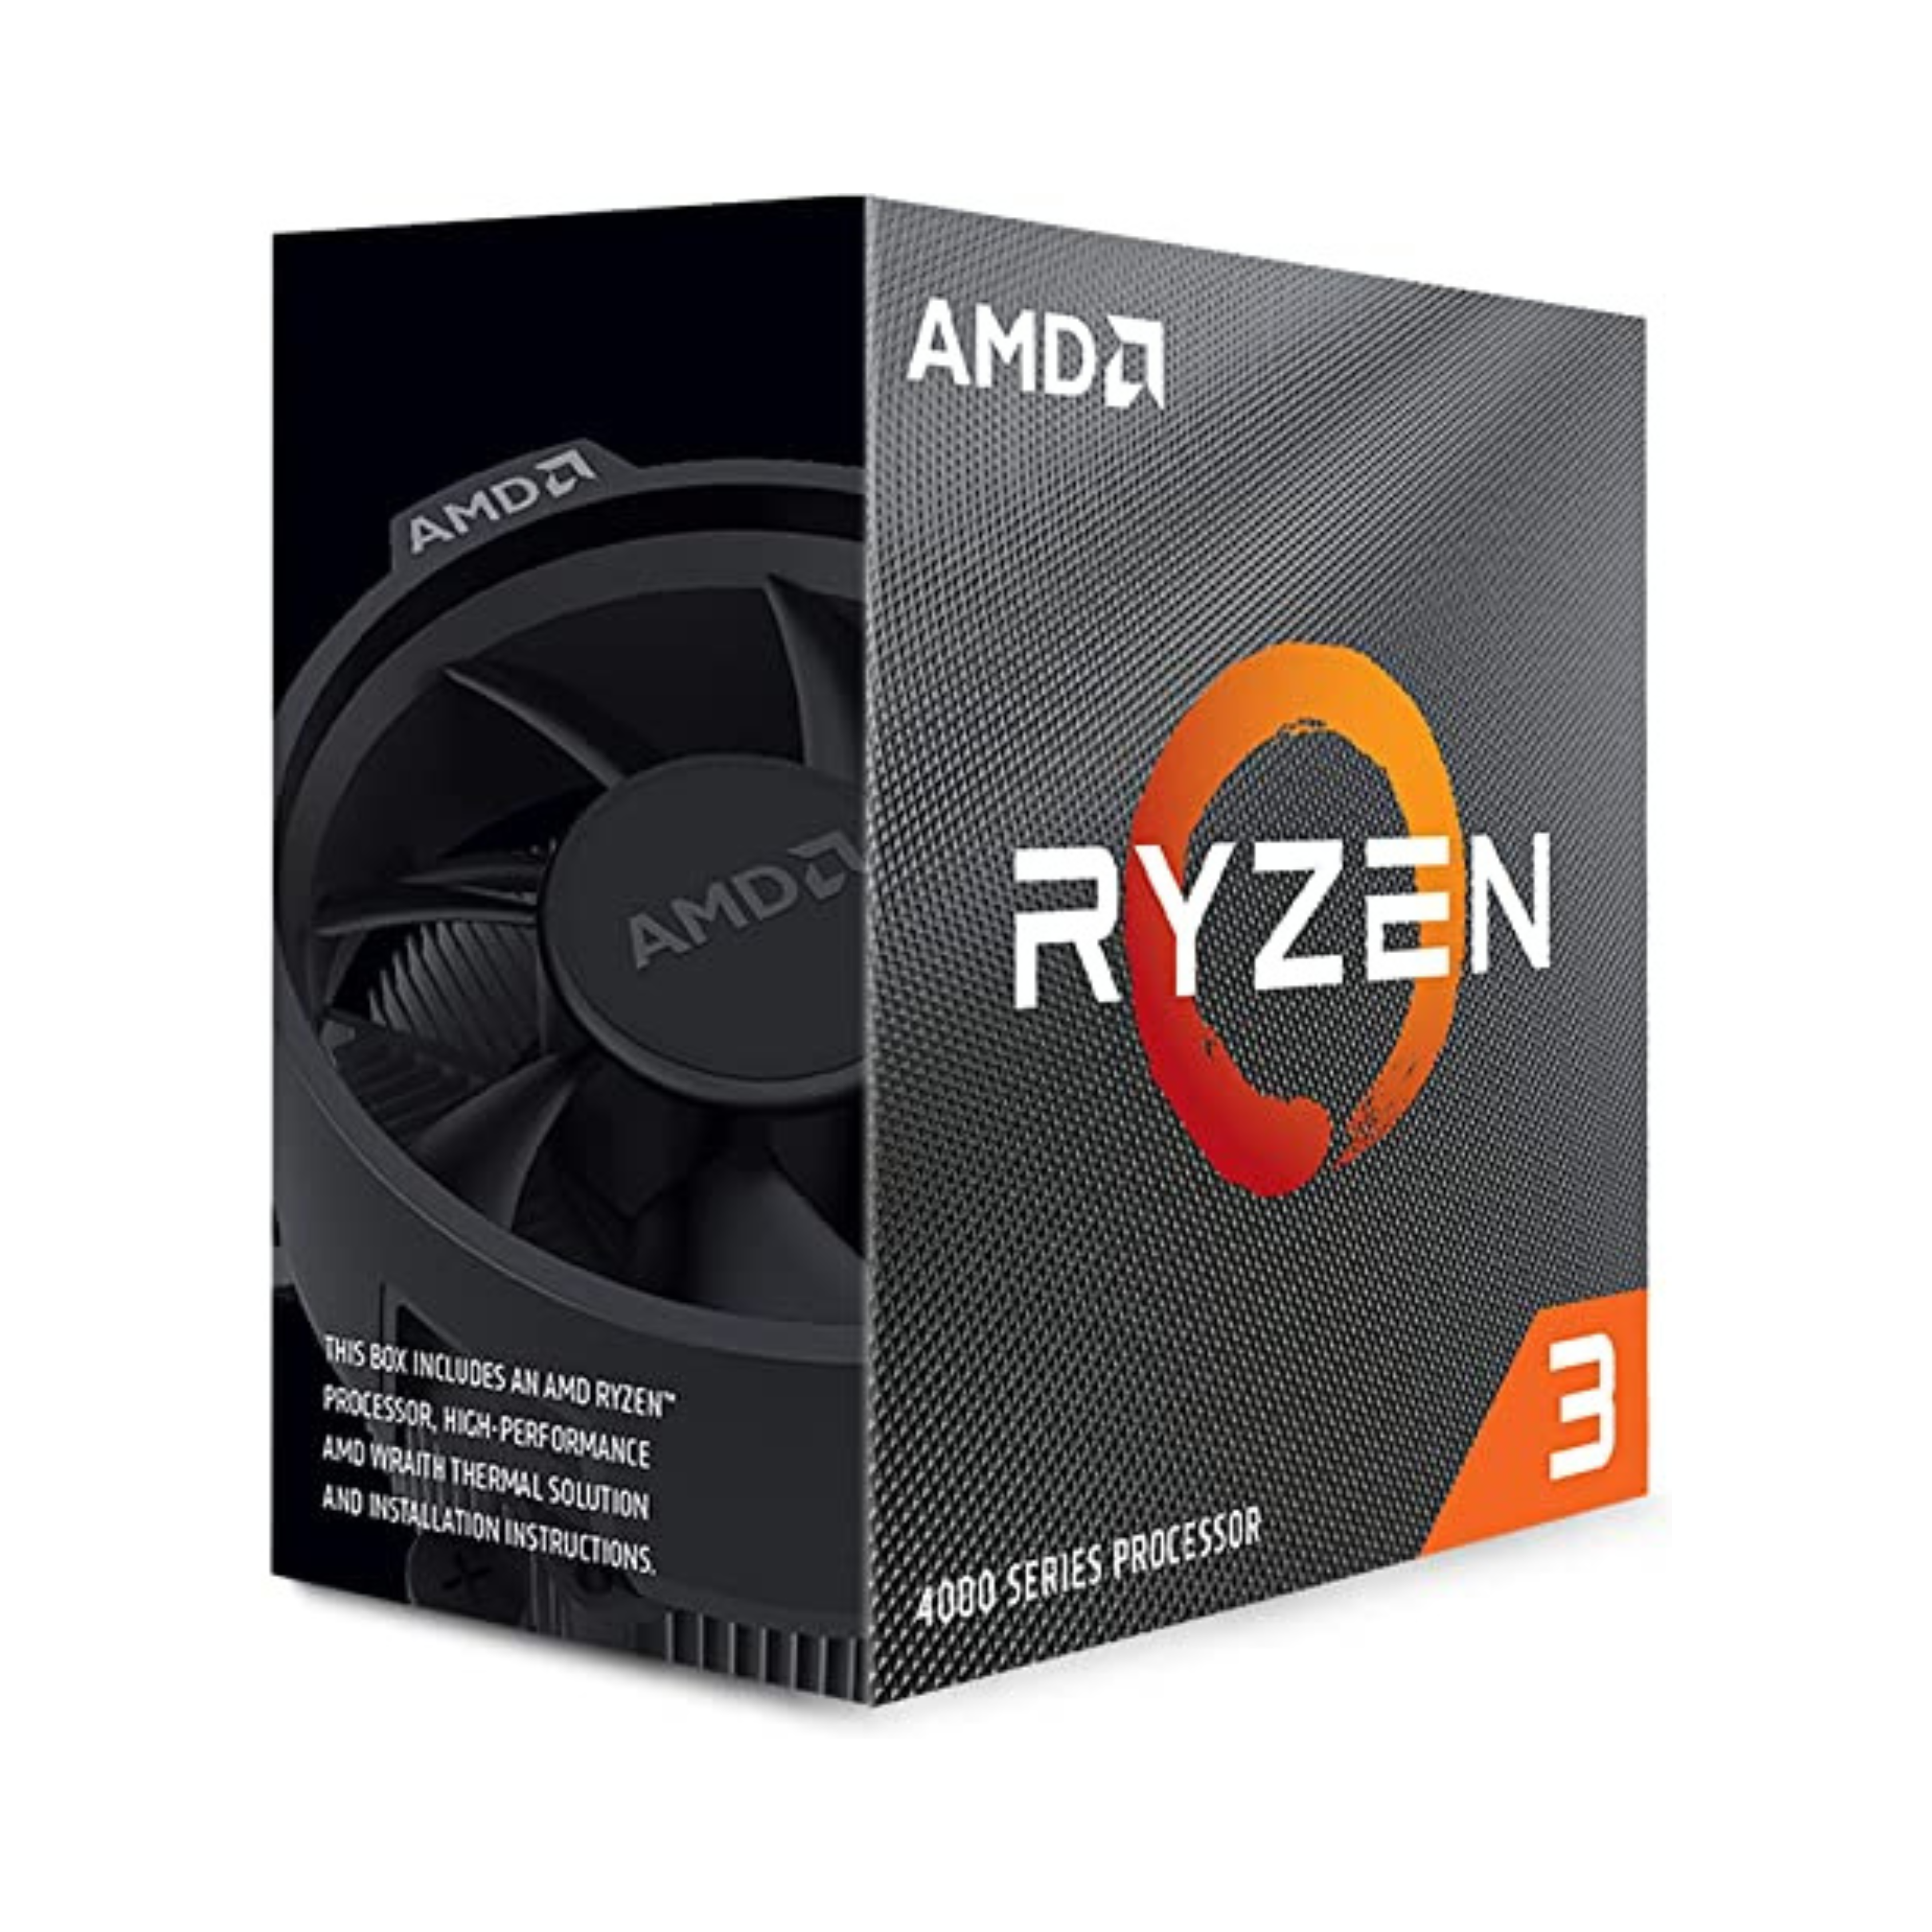 AMD Ryzen 3 4100 CPU